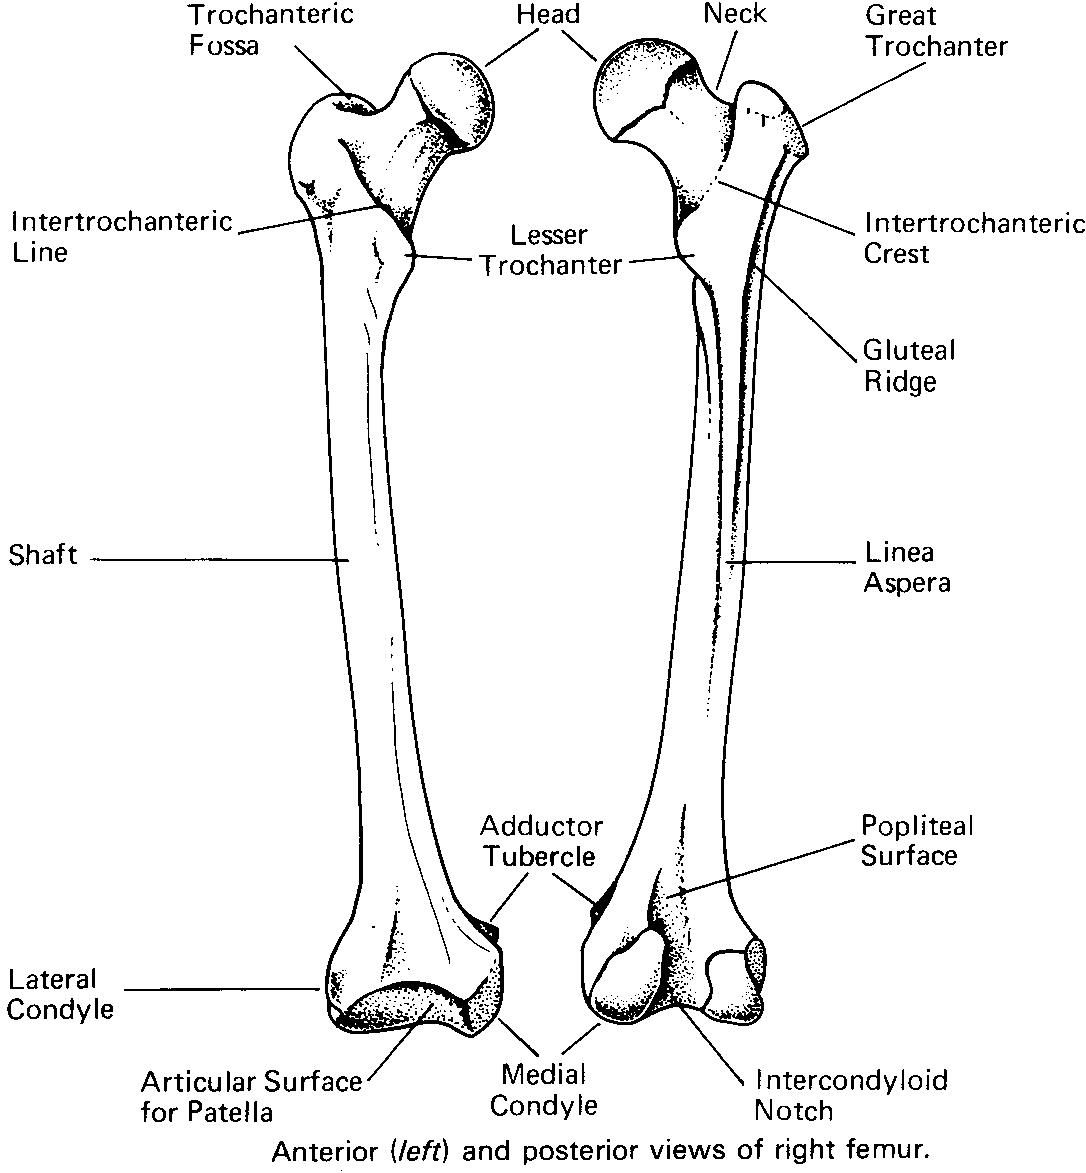 Medial Condyle of Femur Bone Image